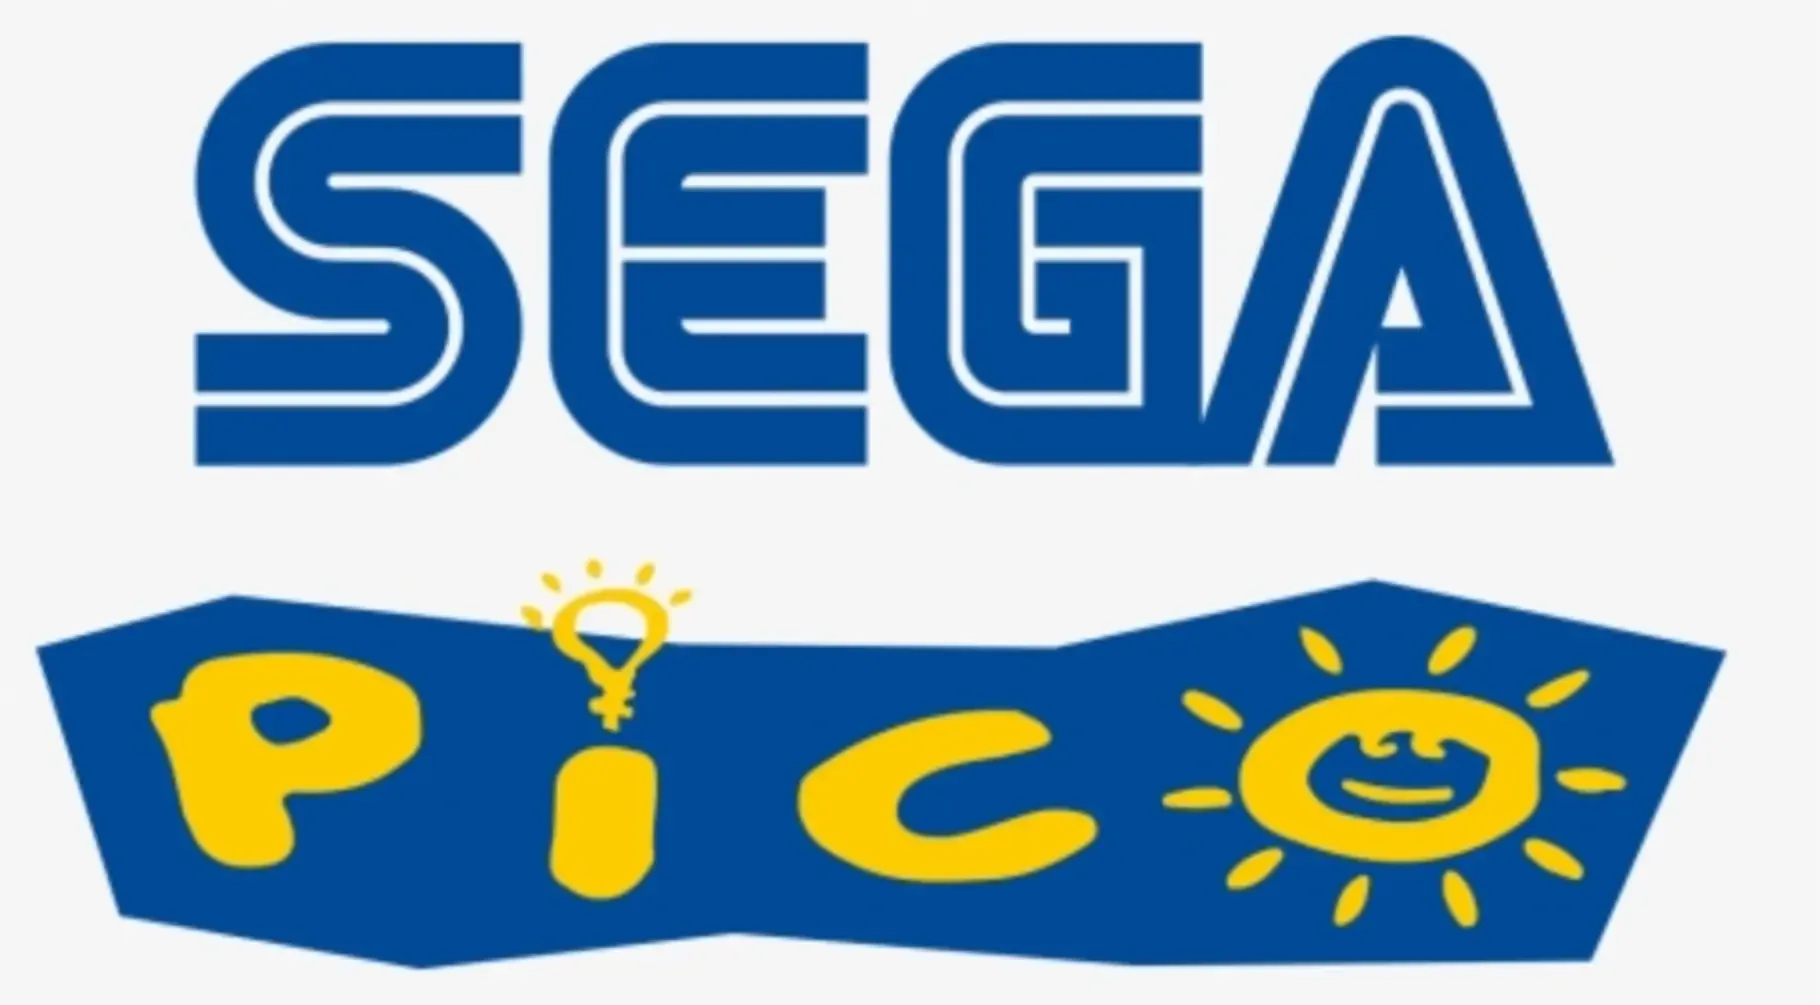 Sega Pico - Initial version